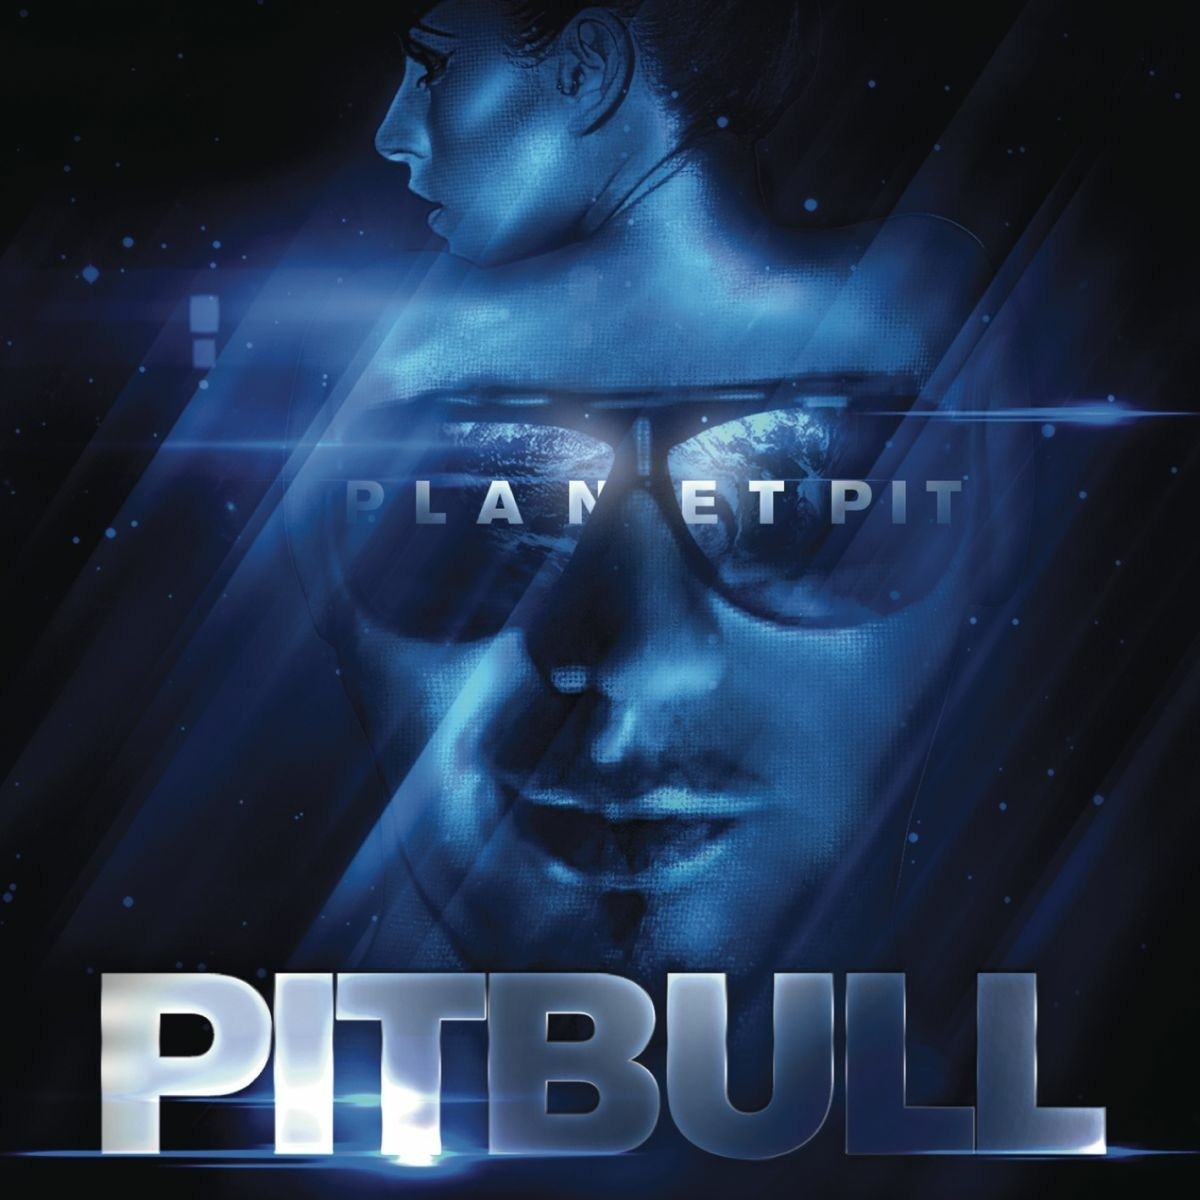 Pitbull Planet Pit cover artwork